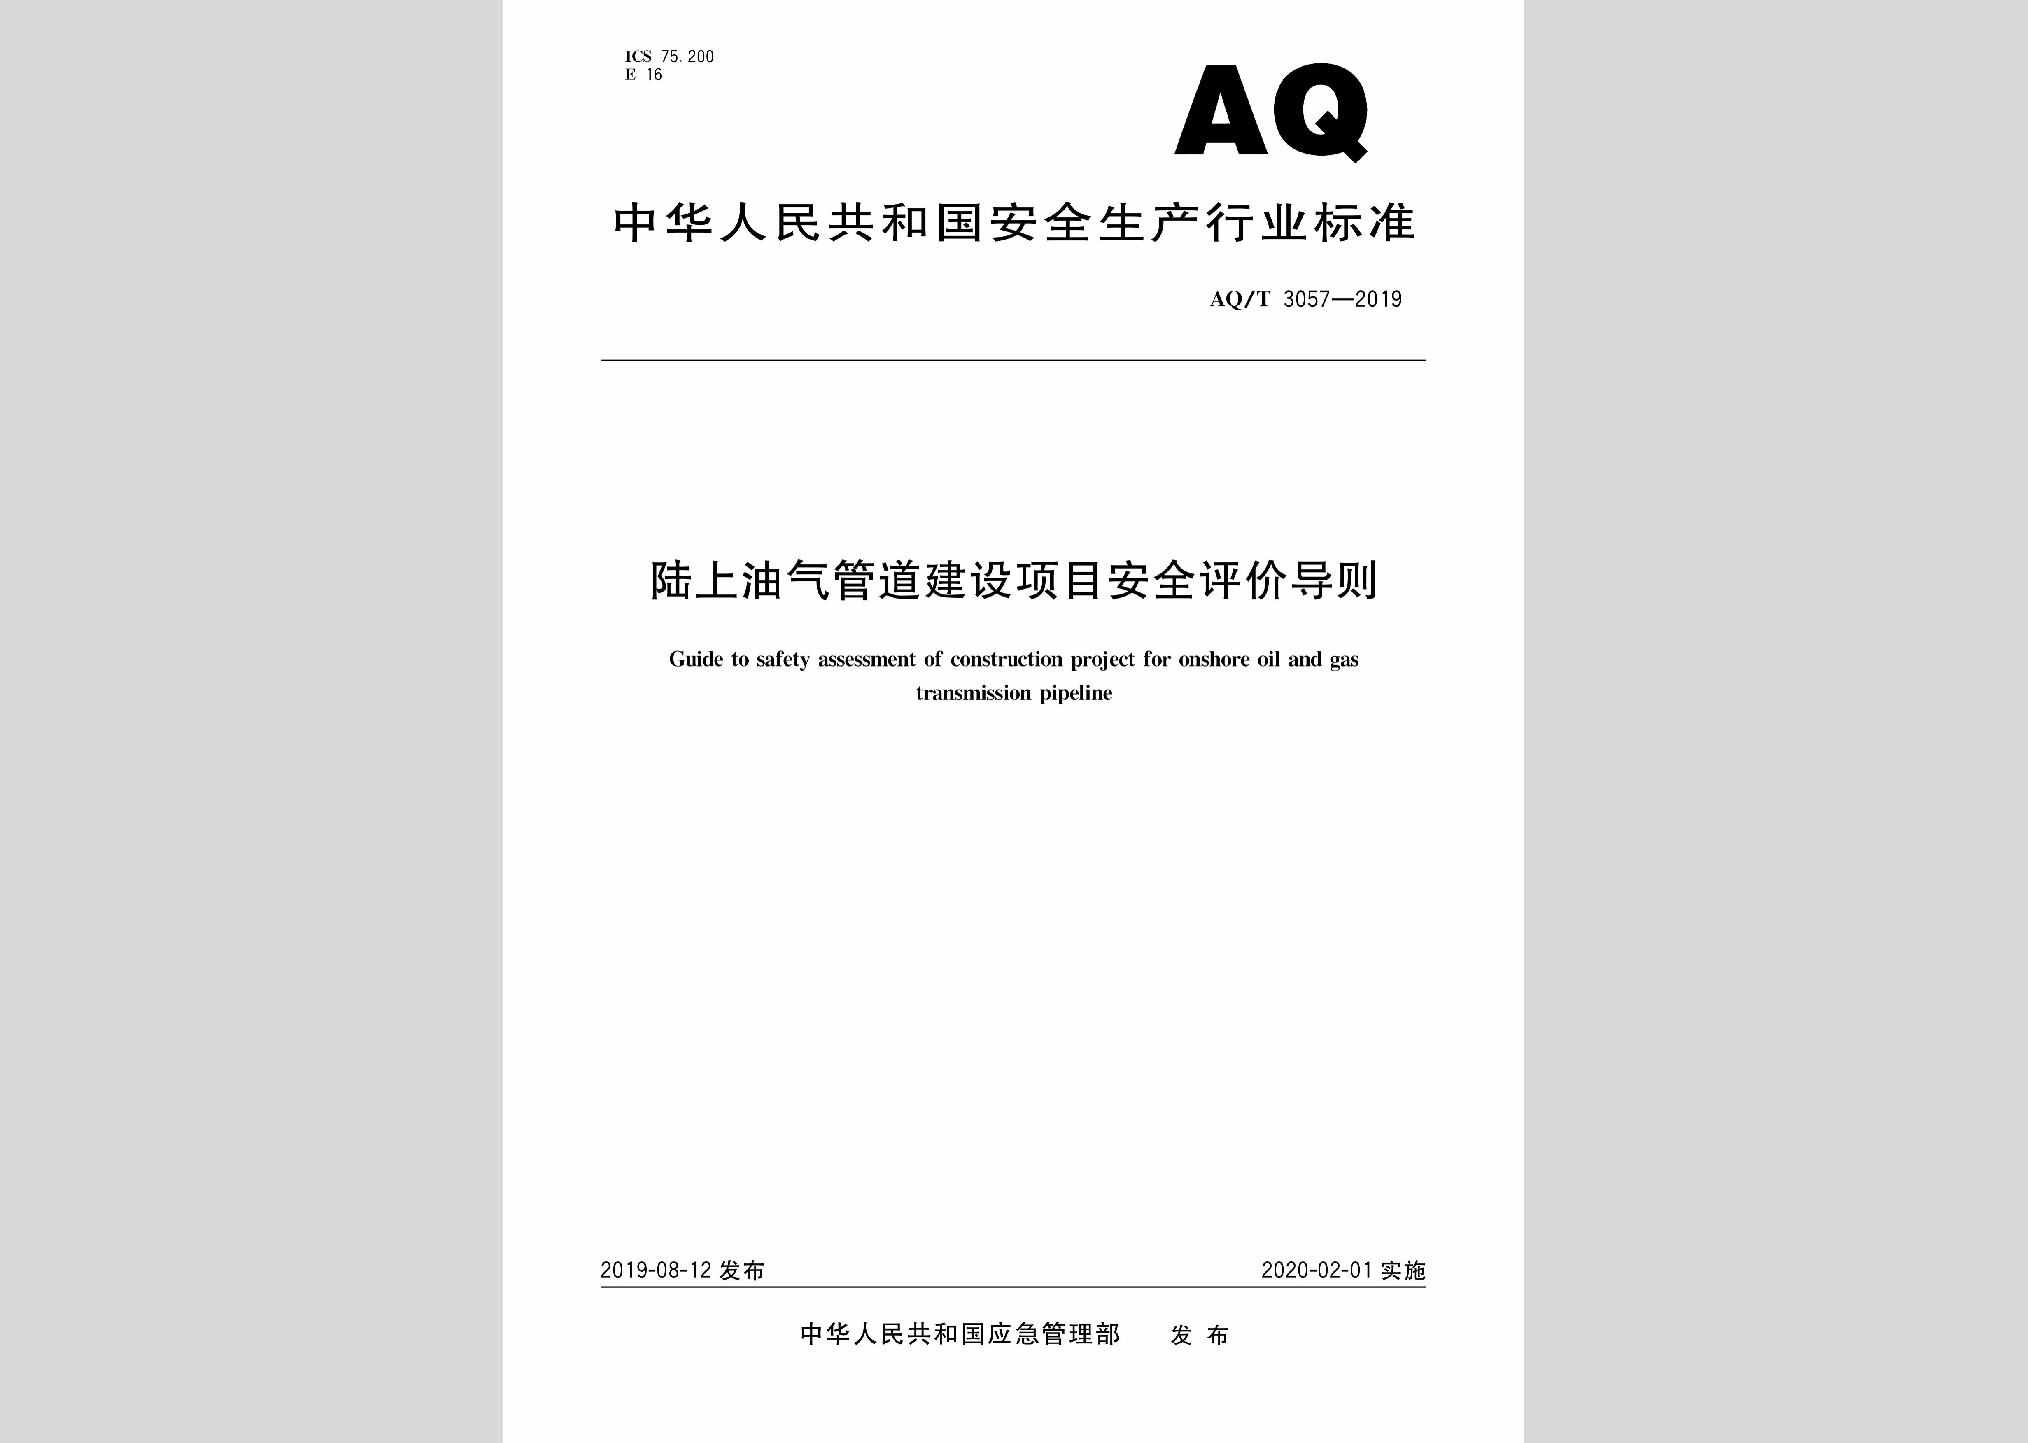 AQ/T3057-2019：陆上油气管道建设项目安全评价导则